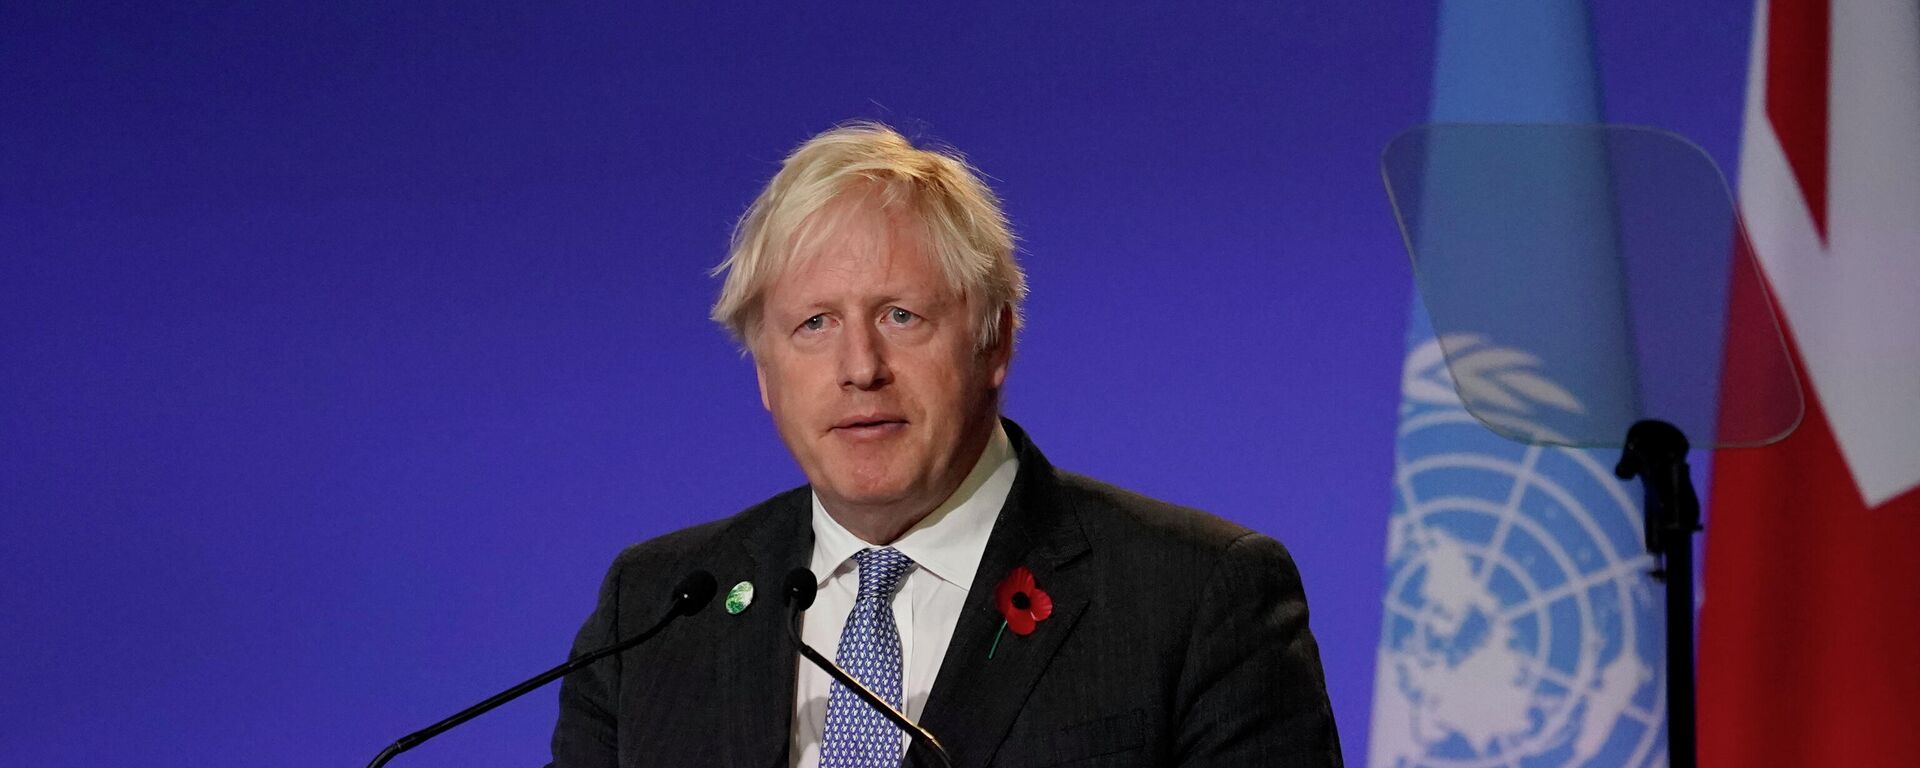 British Prime Minister Boris Johnson speaks during the opening ceremony of the COP26 U.N. Climate Summit, in Glasgow, Scotland, Monday, Nov. 1, 2021. - Sputnik International, 1920, 01.11.2021